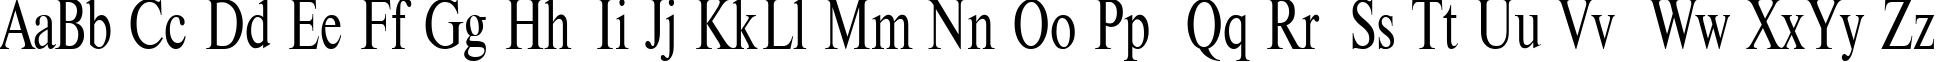 Пример написания английского алфавита шрифтом TimesET70n